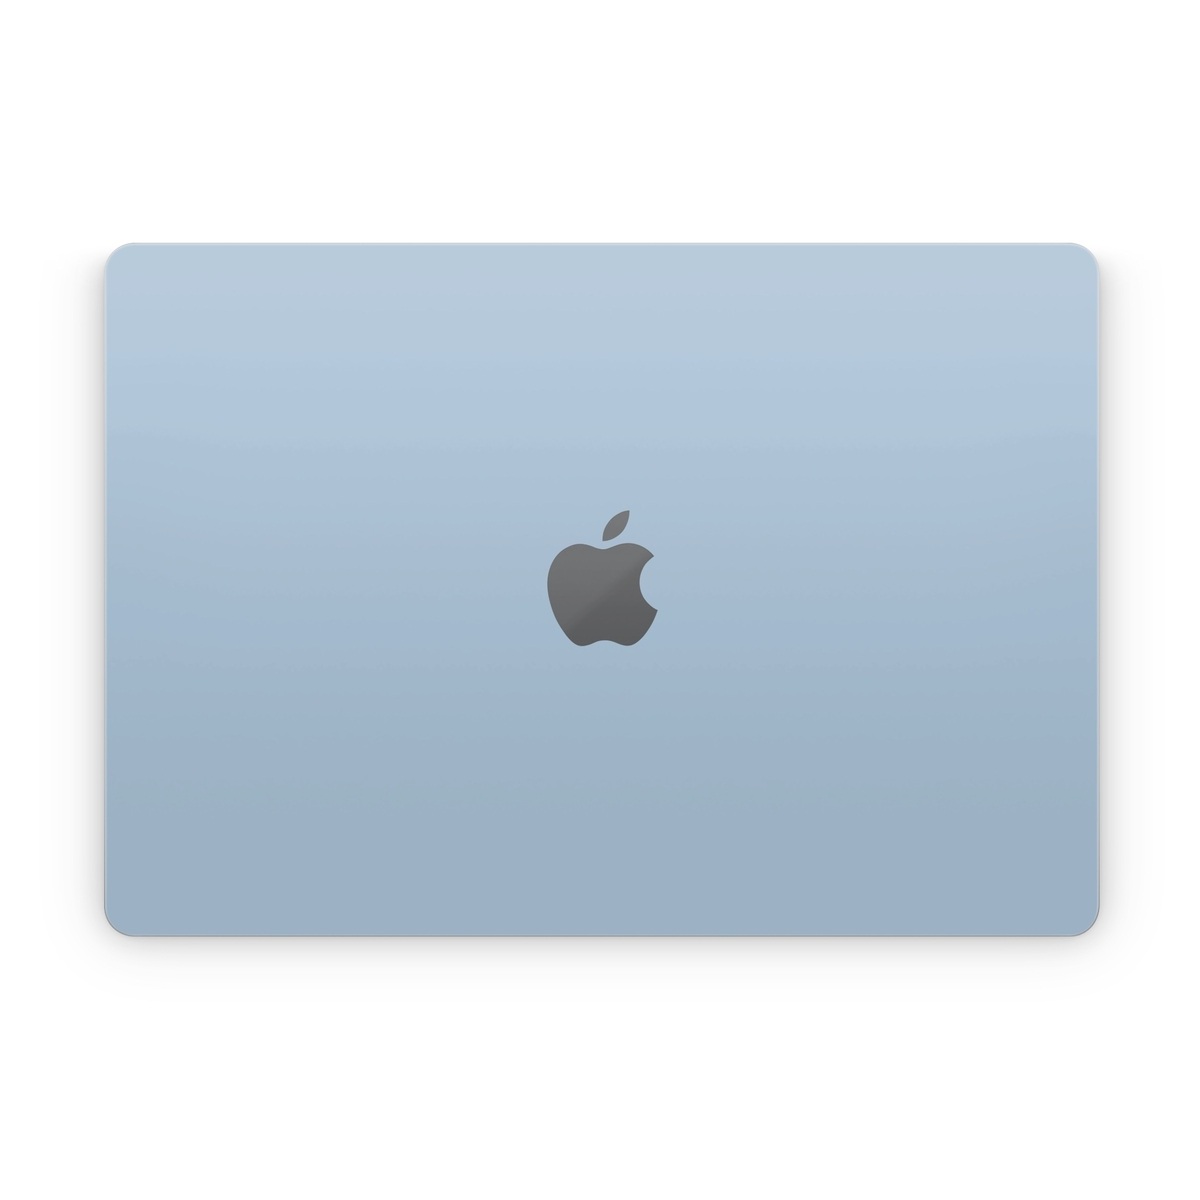 Solid State Blue Mist Apple MacBook Skin | iStyles